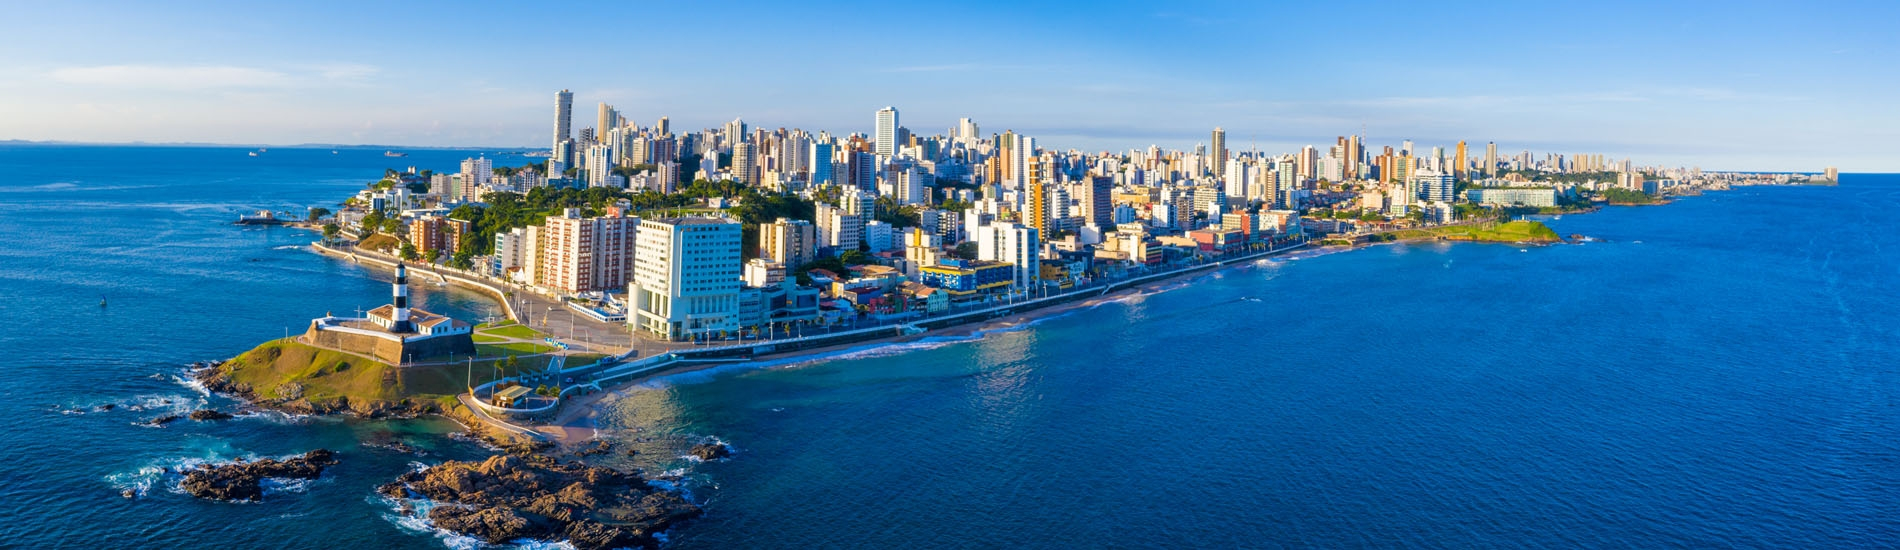 Salvador Bahia panoramic view